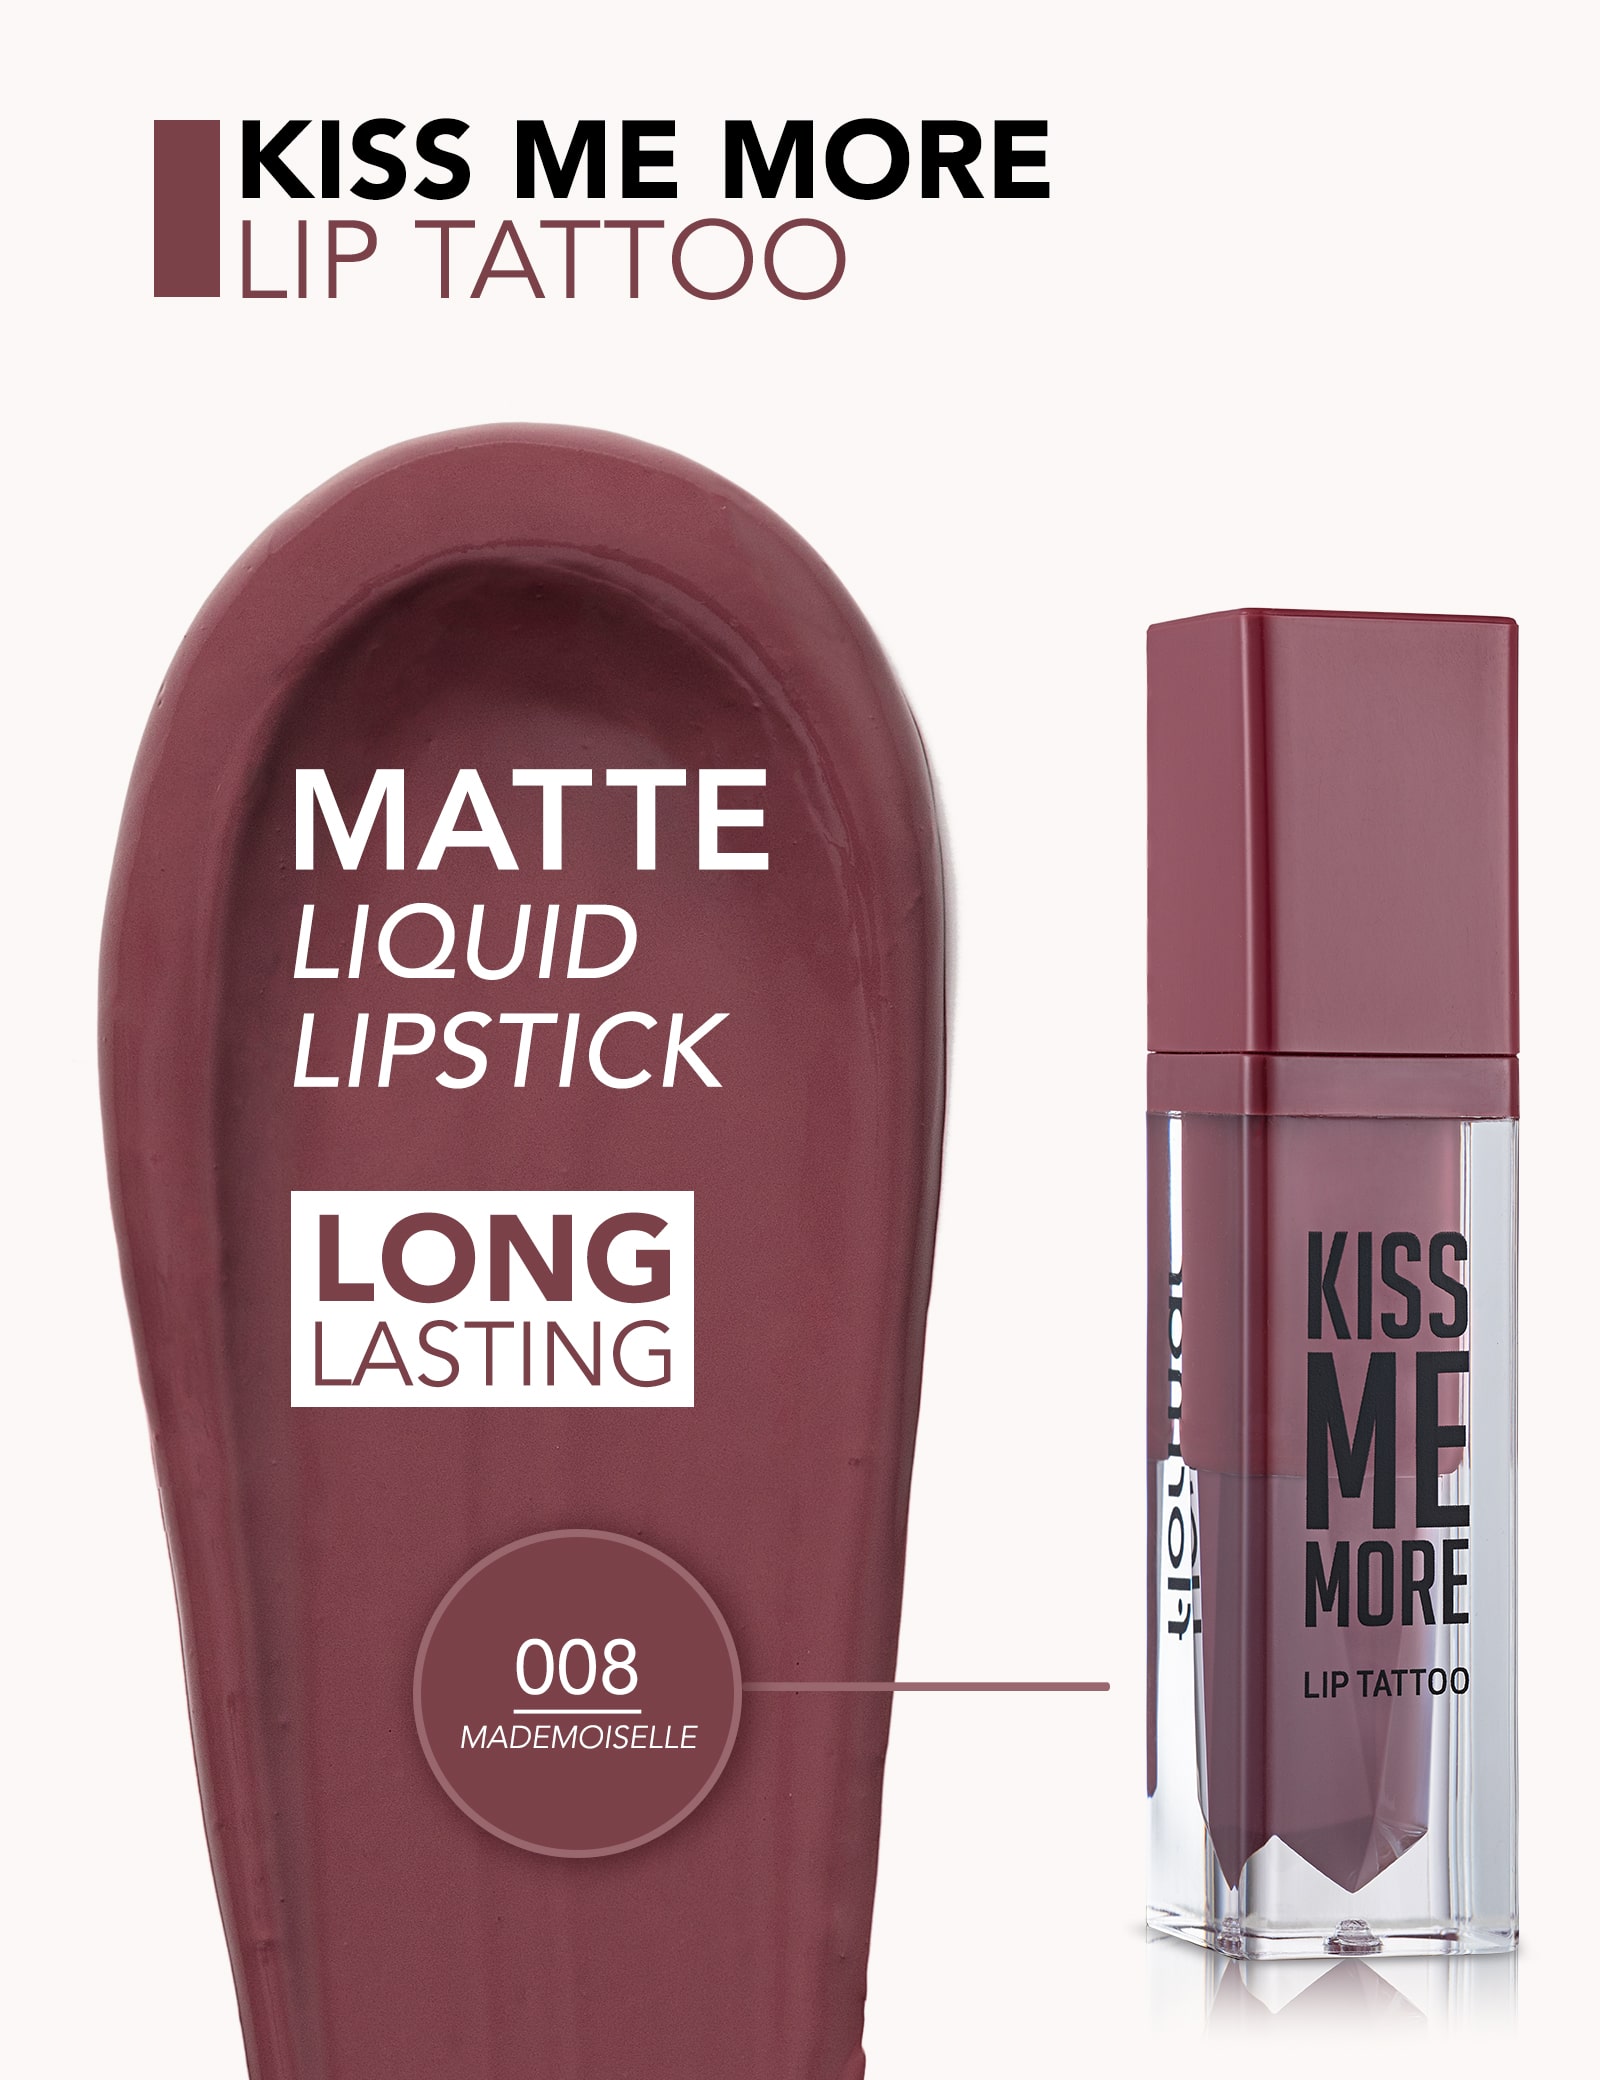 Kiss Me More Lip Tattoo - 008 Mademoiselle